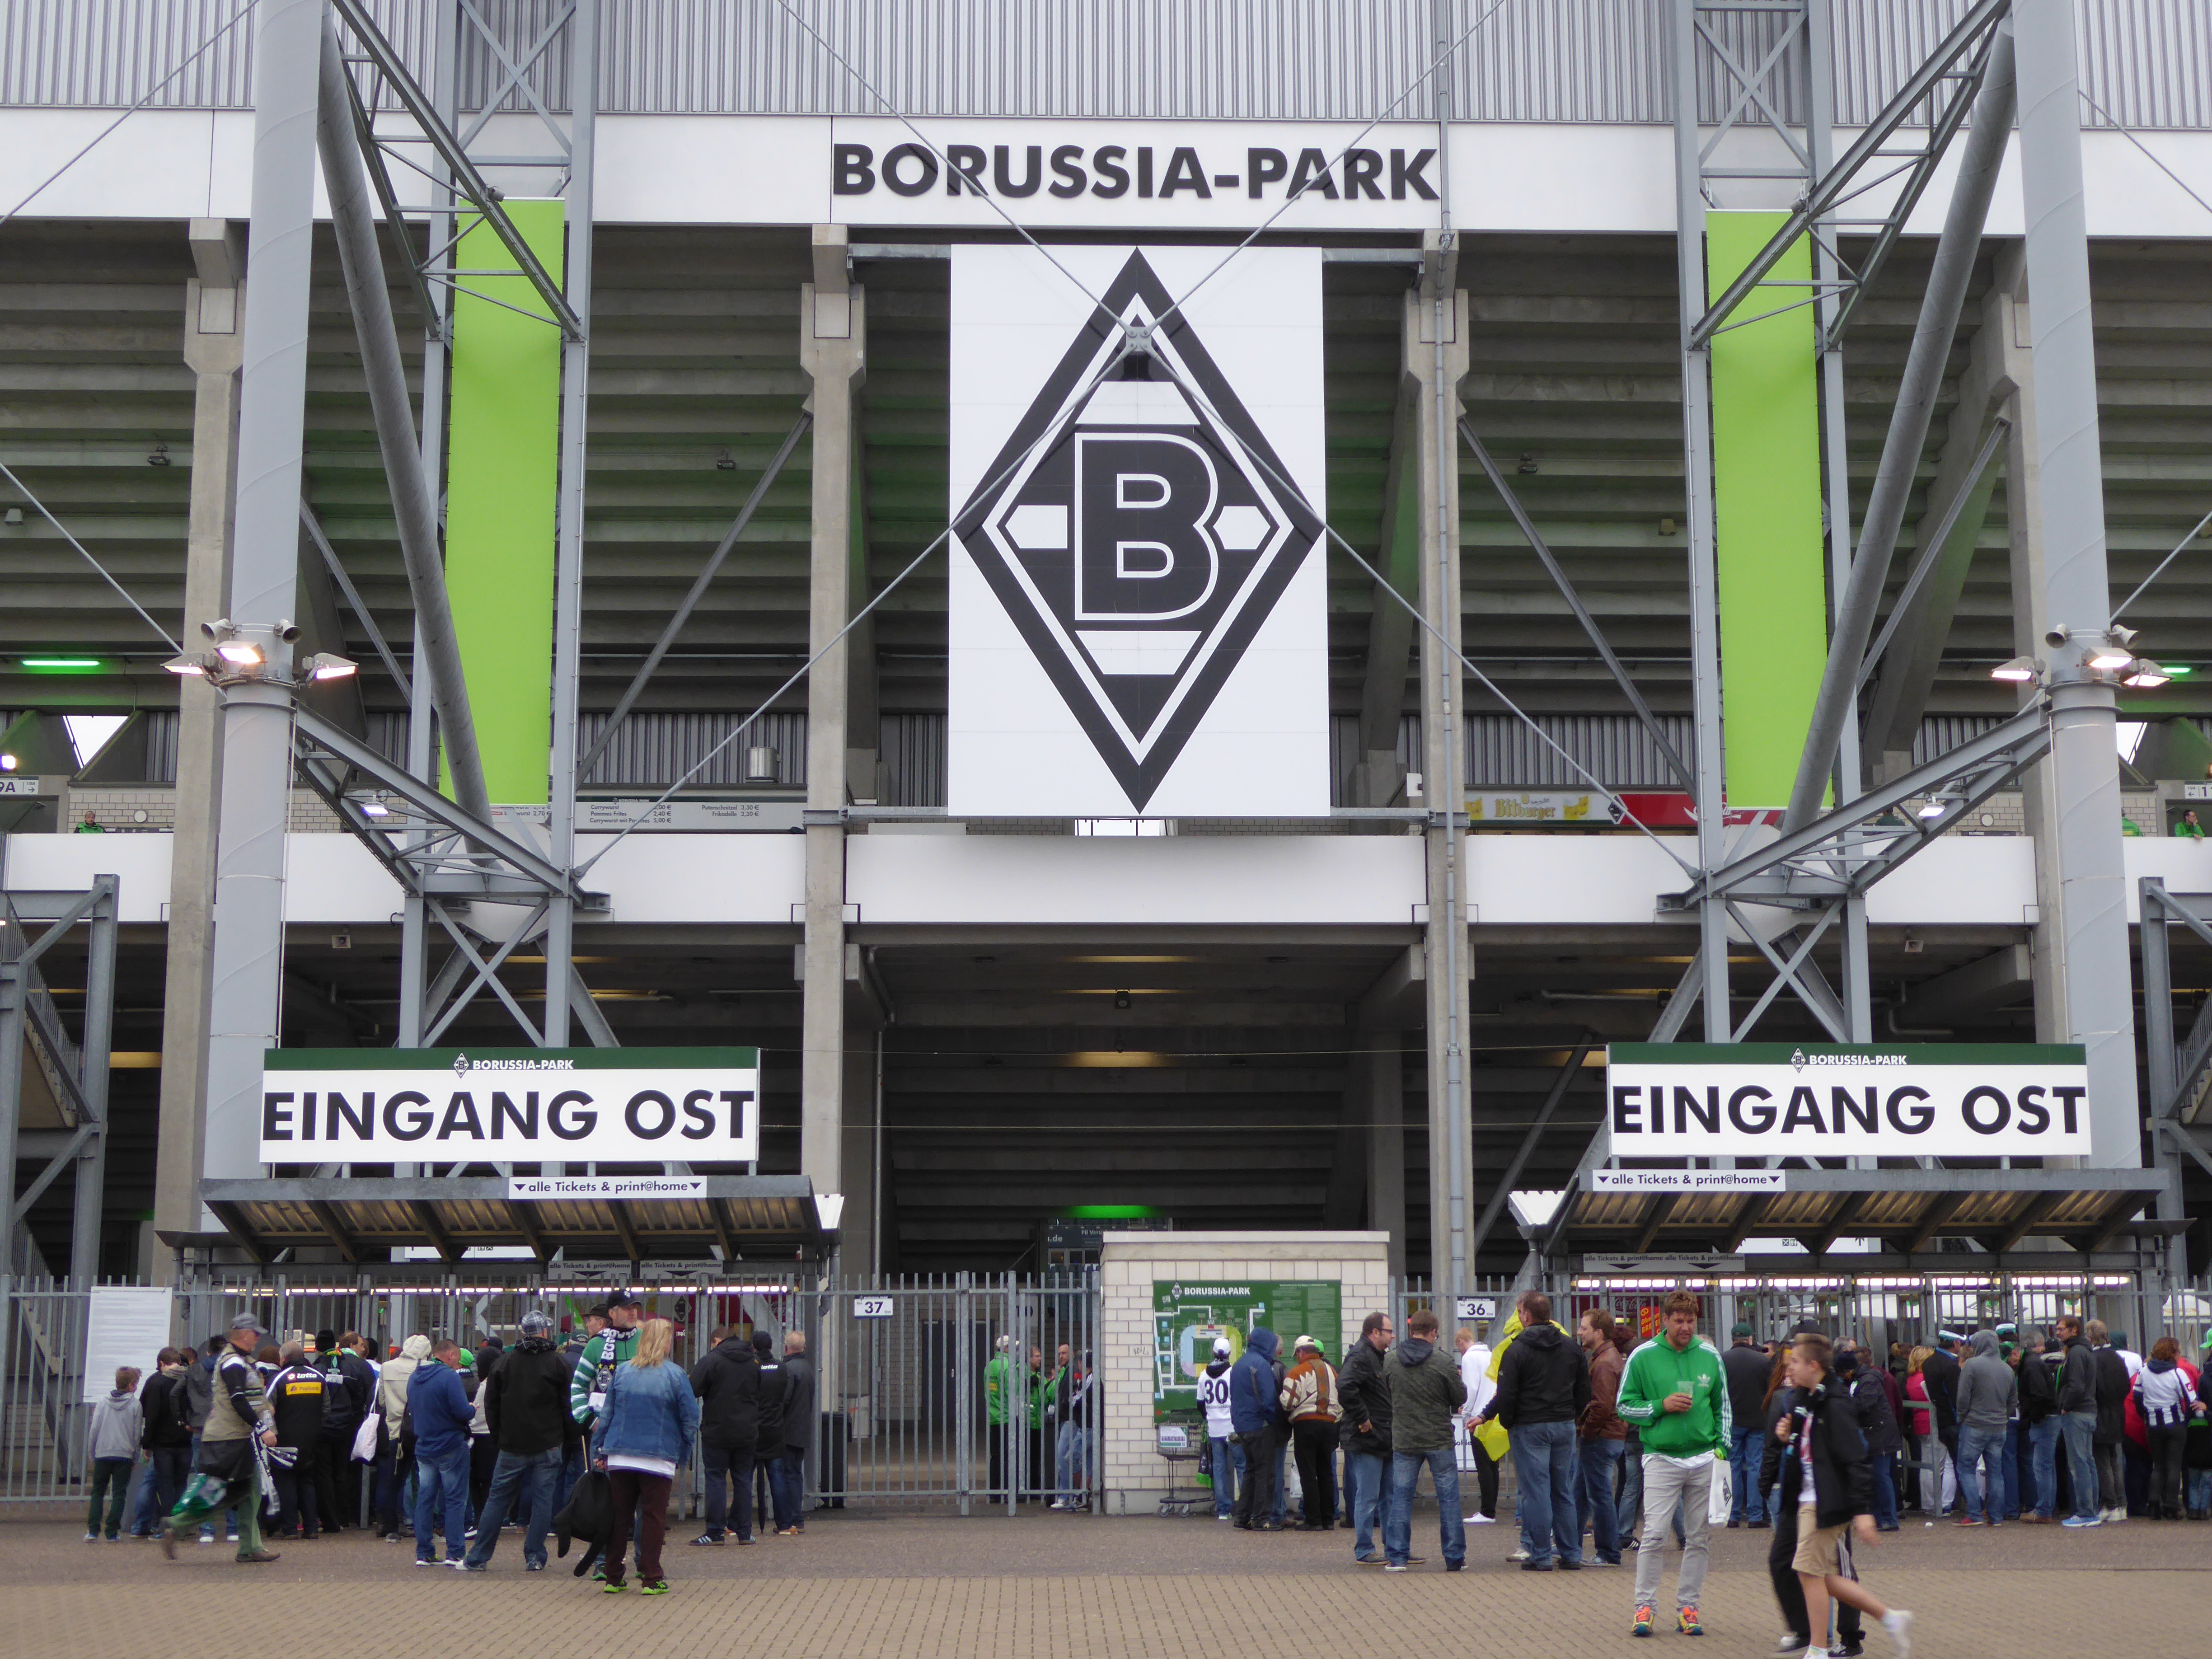 Borussia Mönchengladbach - another great German football club